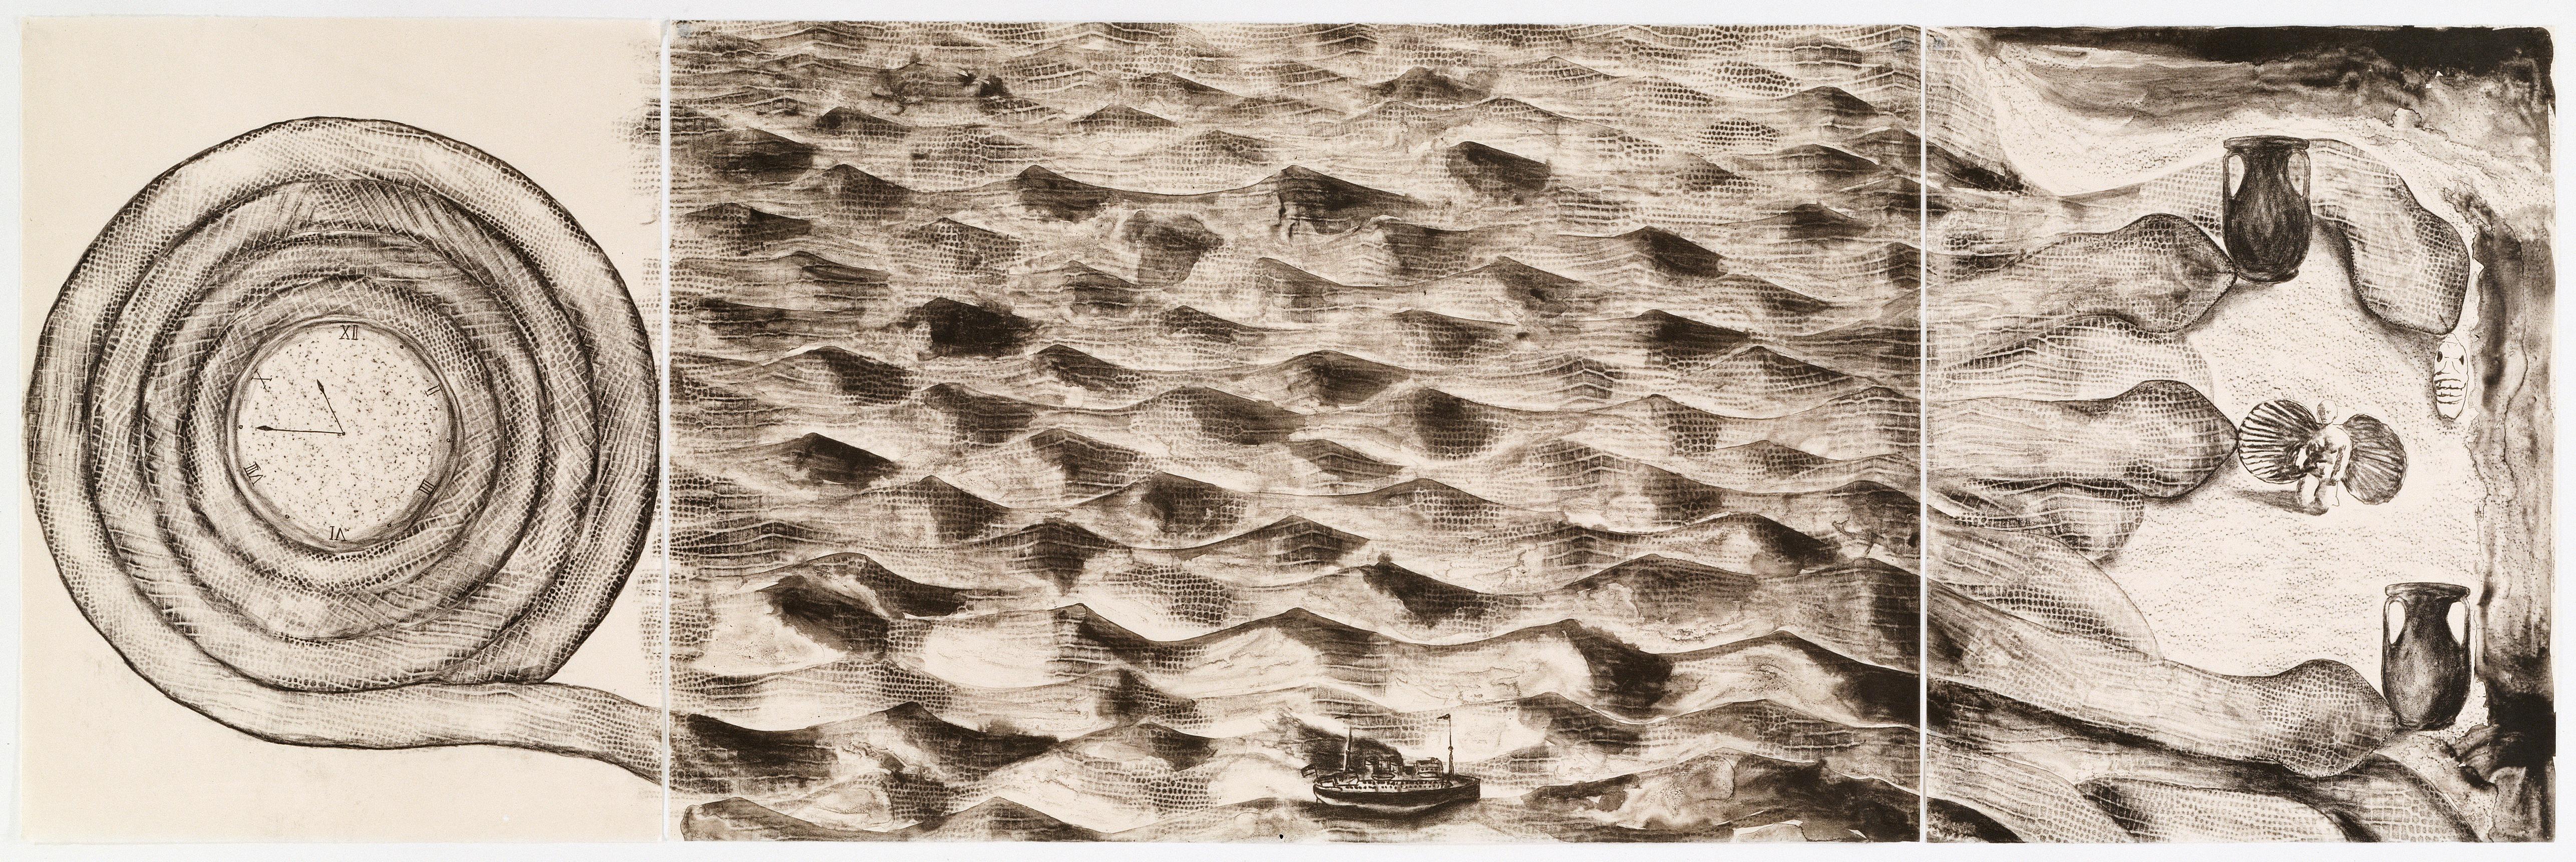 Francesco Clemente Figurative Print - Clemente Untitled B: surreal mythical landscape, voyage with ocean, Venus, snake